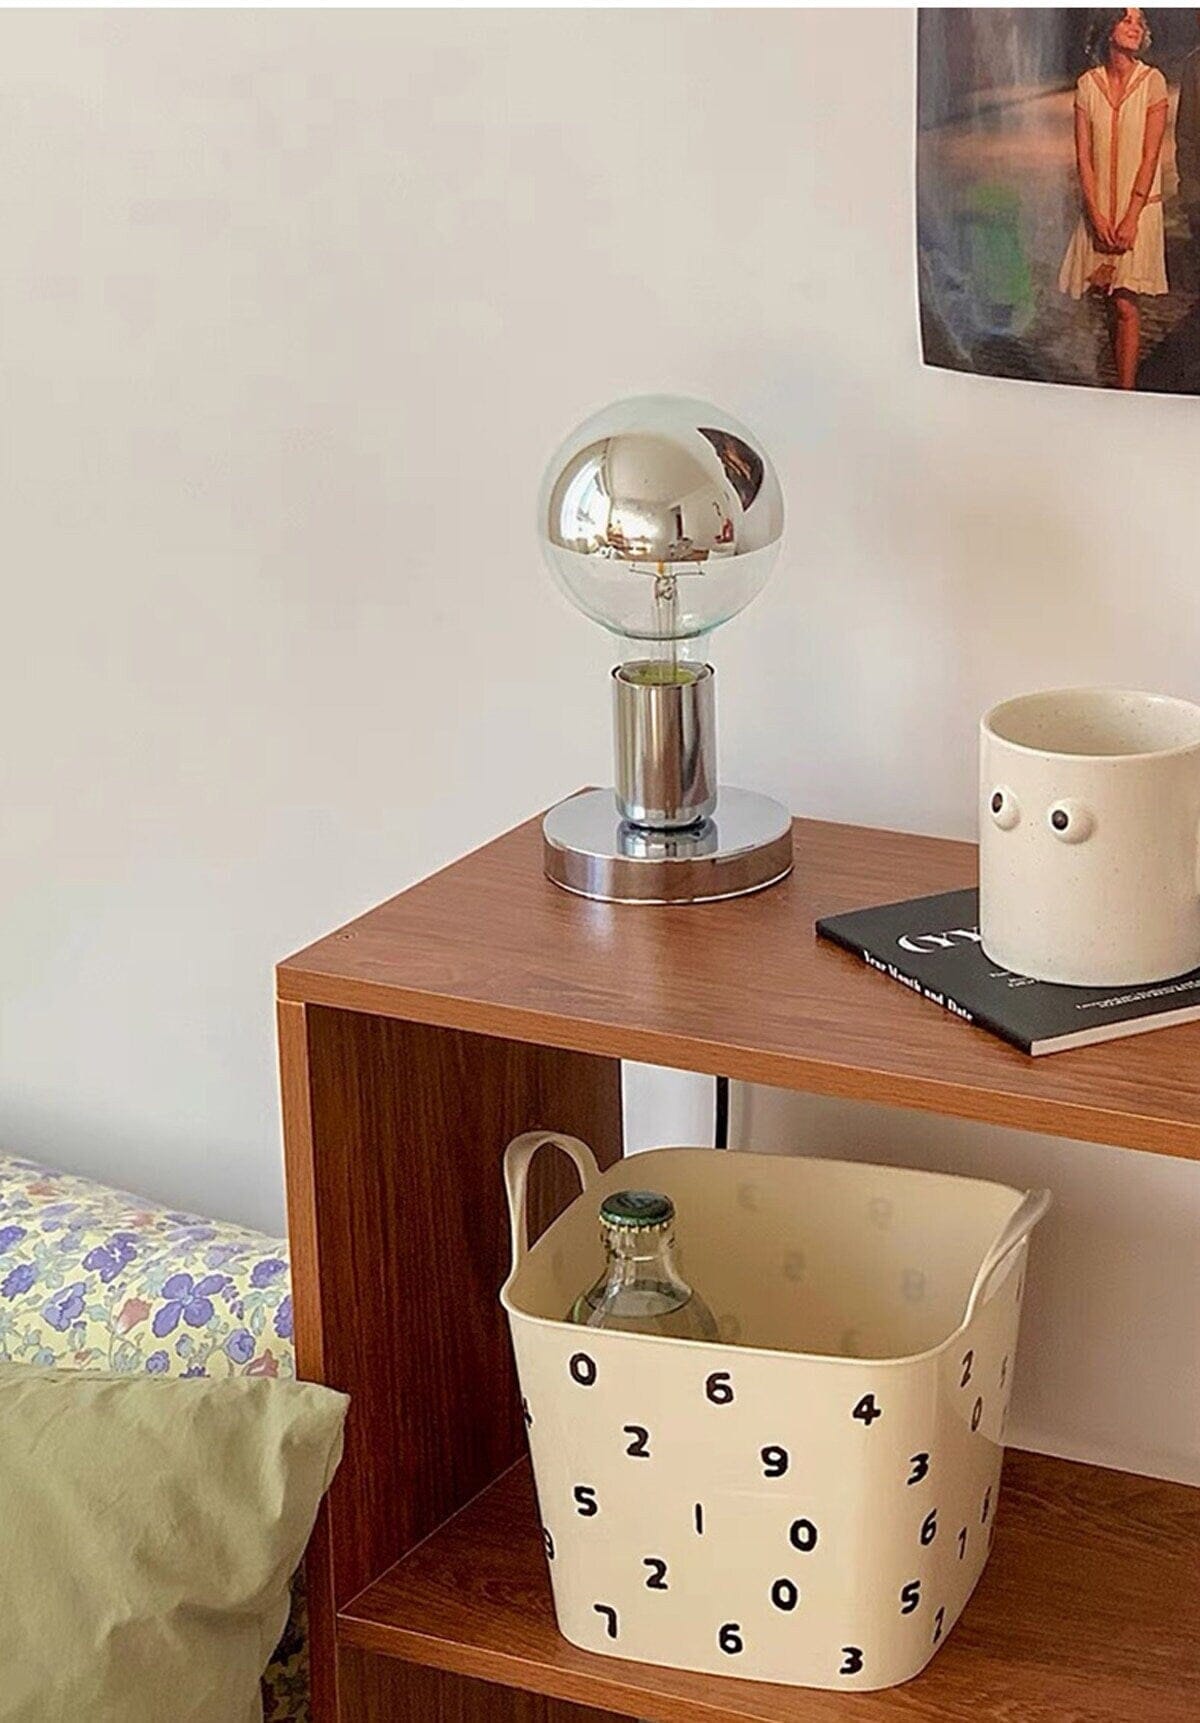 Chrome Table Lamp with Nordic Design - Glass Bedside Light - Modern Home Decor Lighting Table Lamps Artedimo 